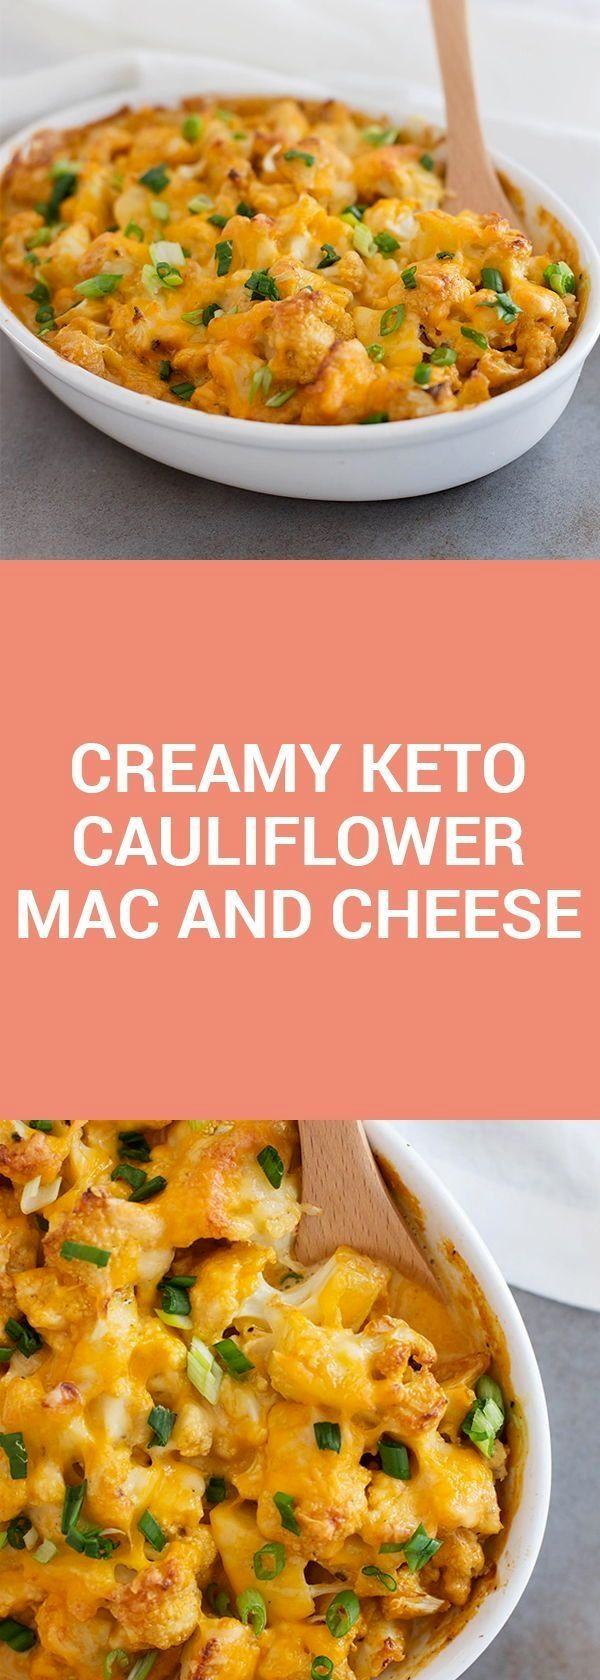 Vegan Keto Mac And Cheese
 e category food keto This baked